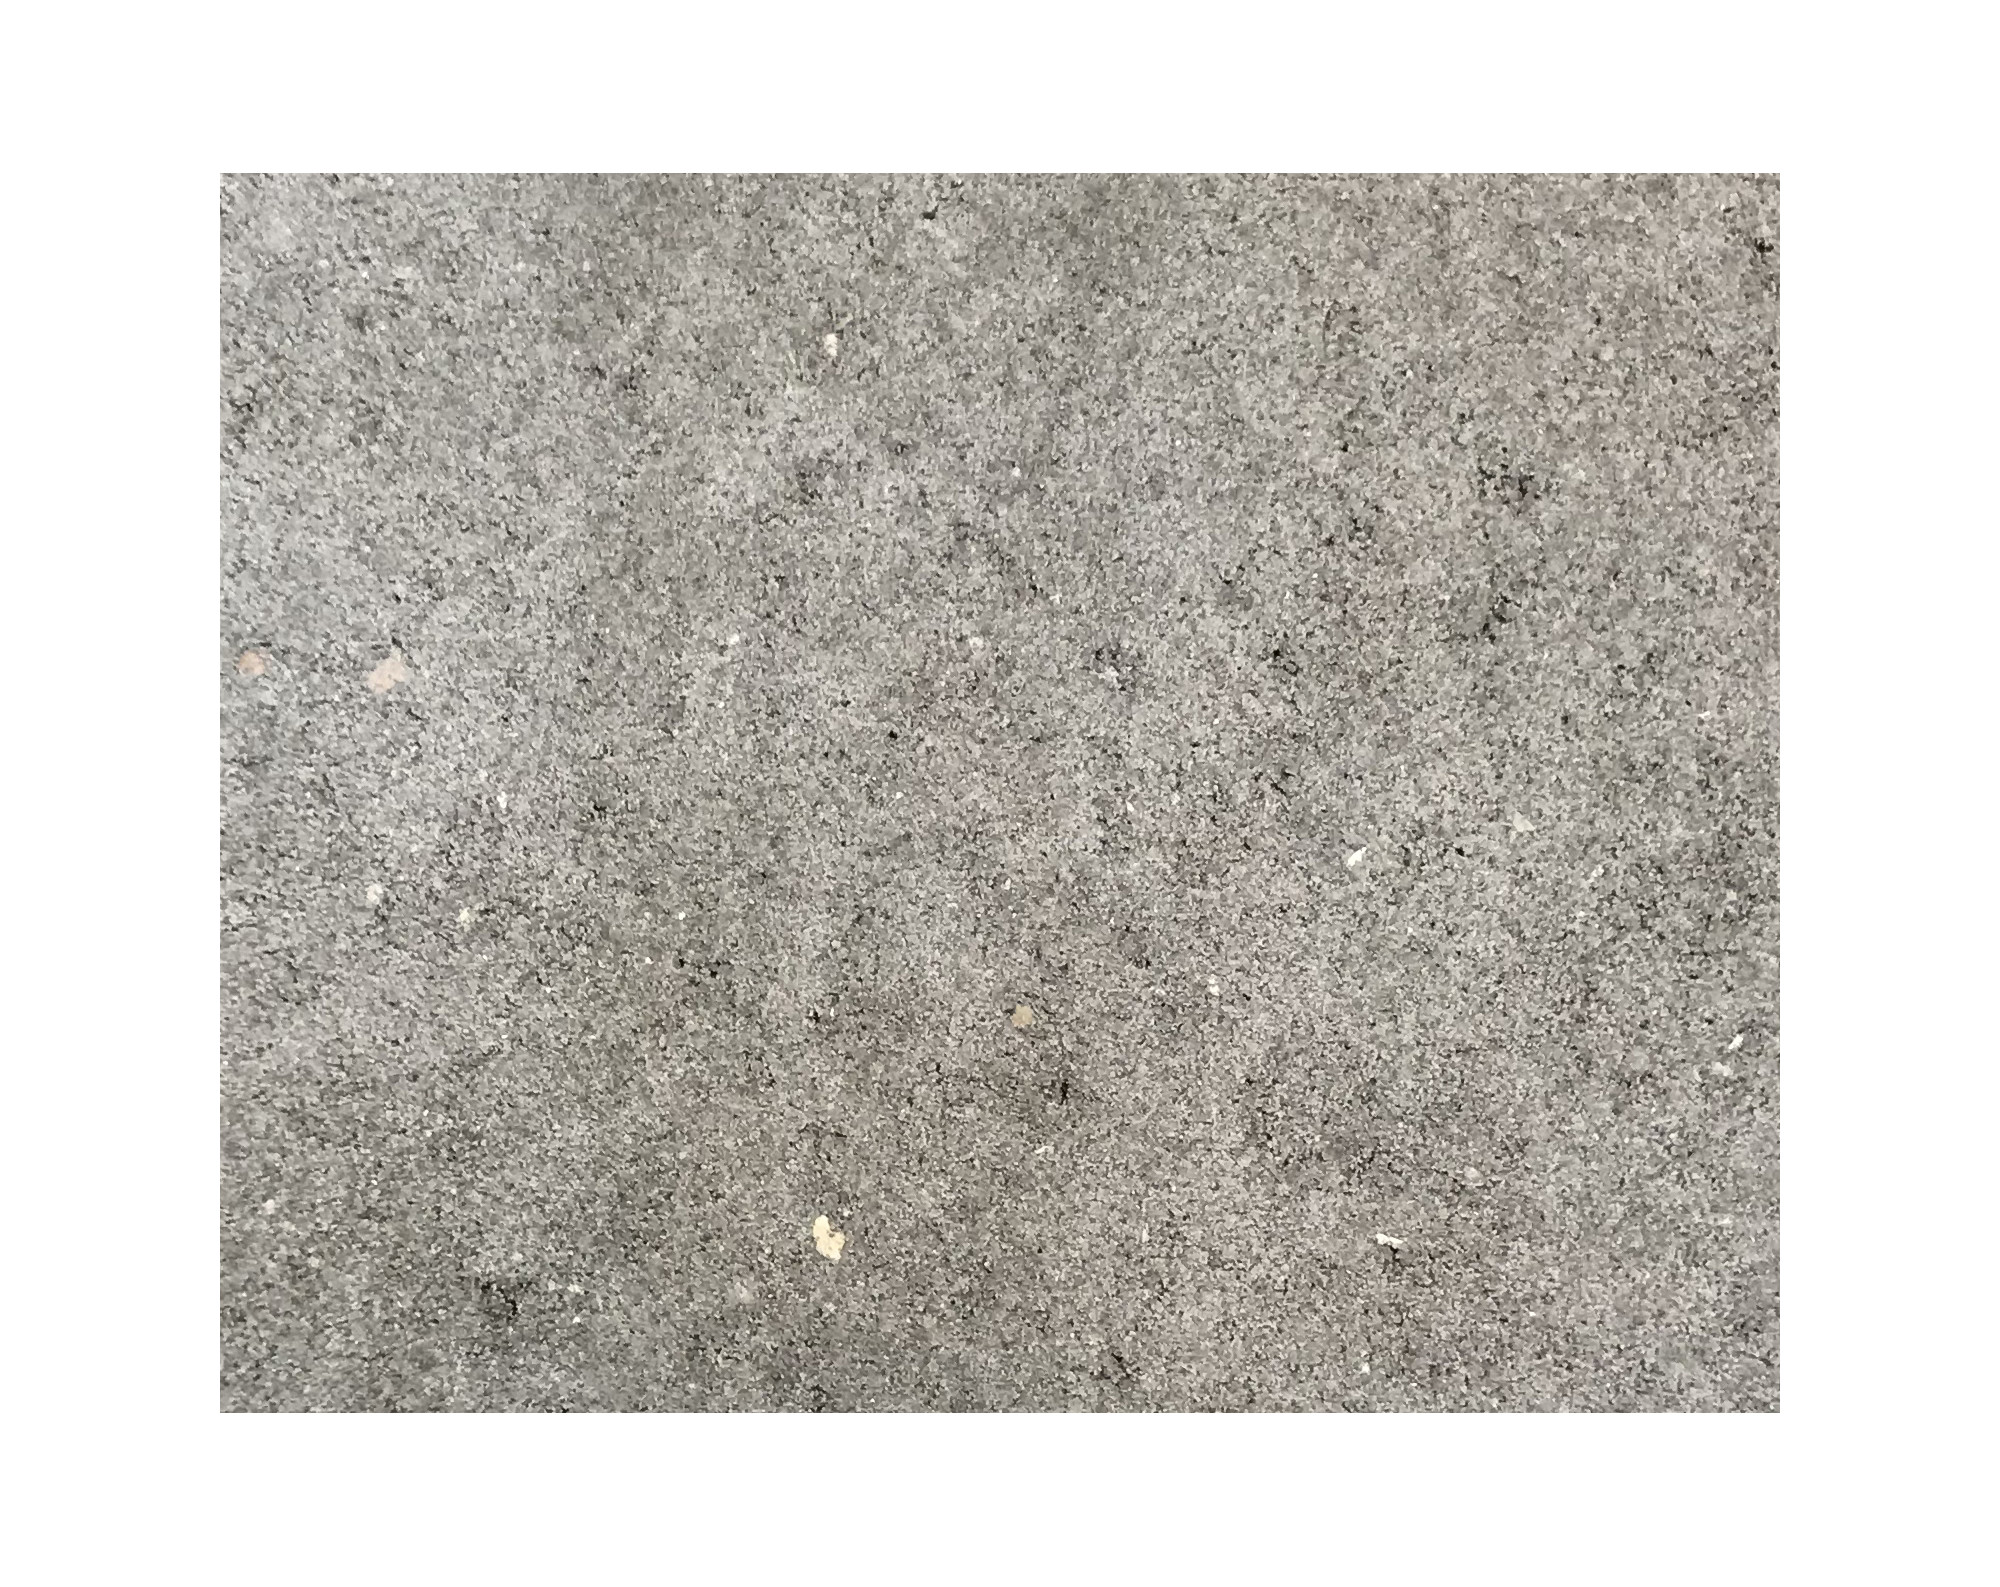 Harmo roc nevadaset, rustica-serie, 8-vormig d:6,00mx9,20m, grijs, beton